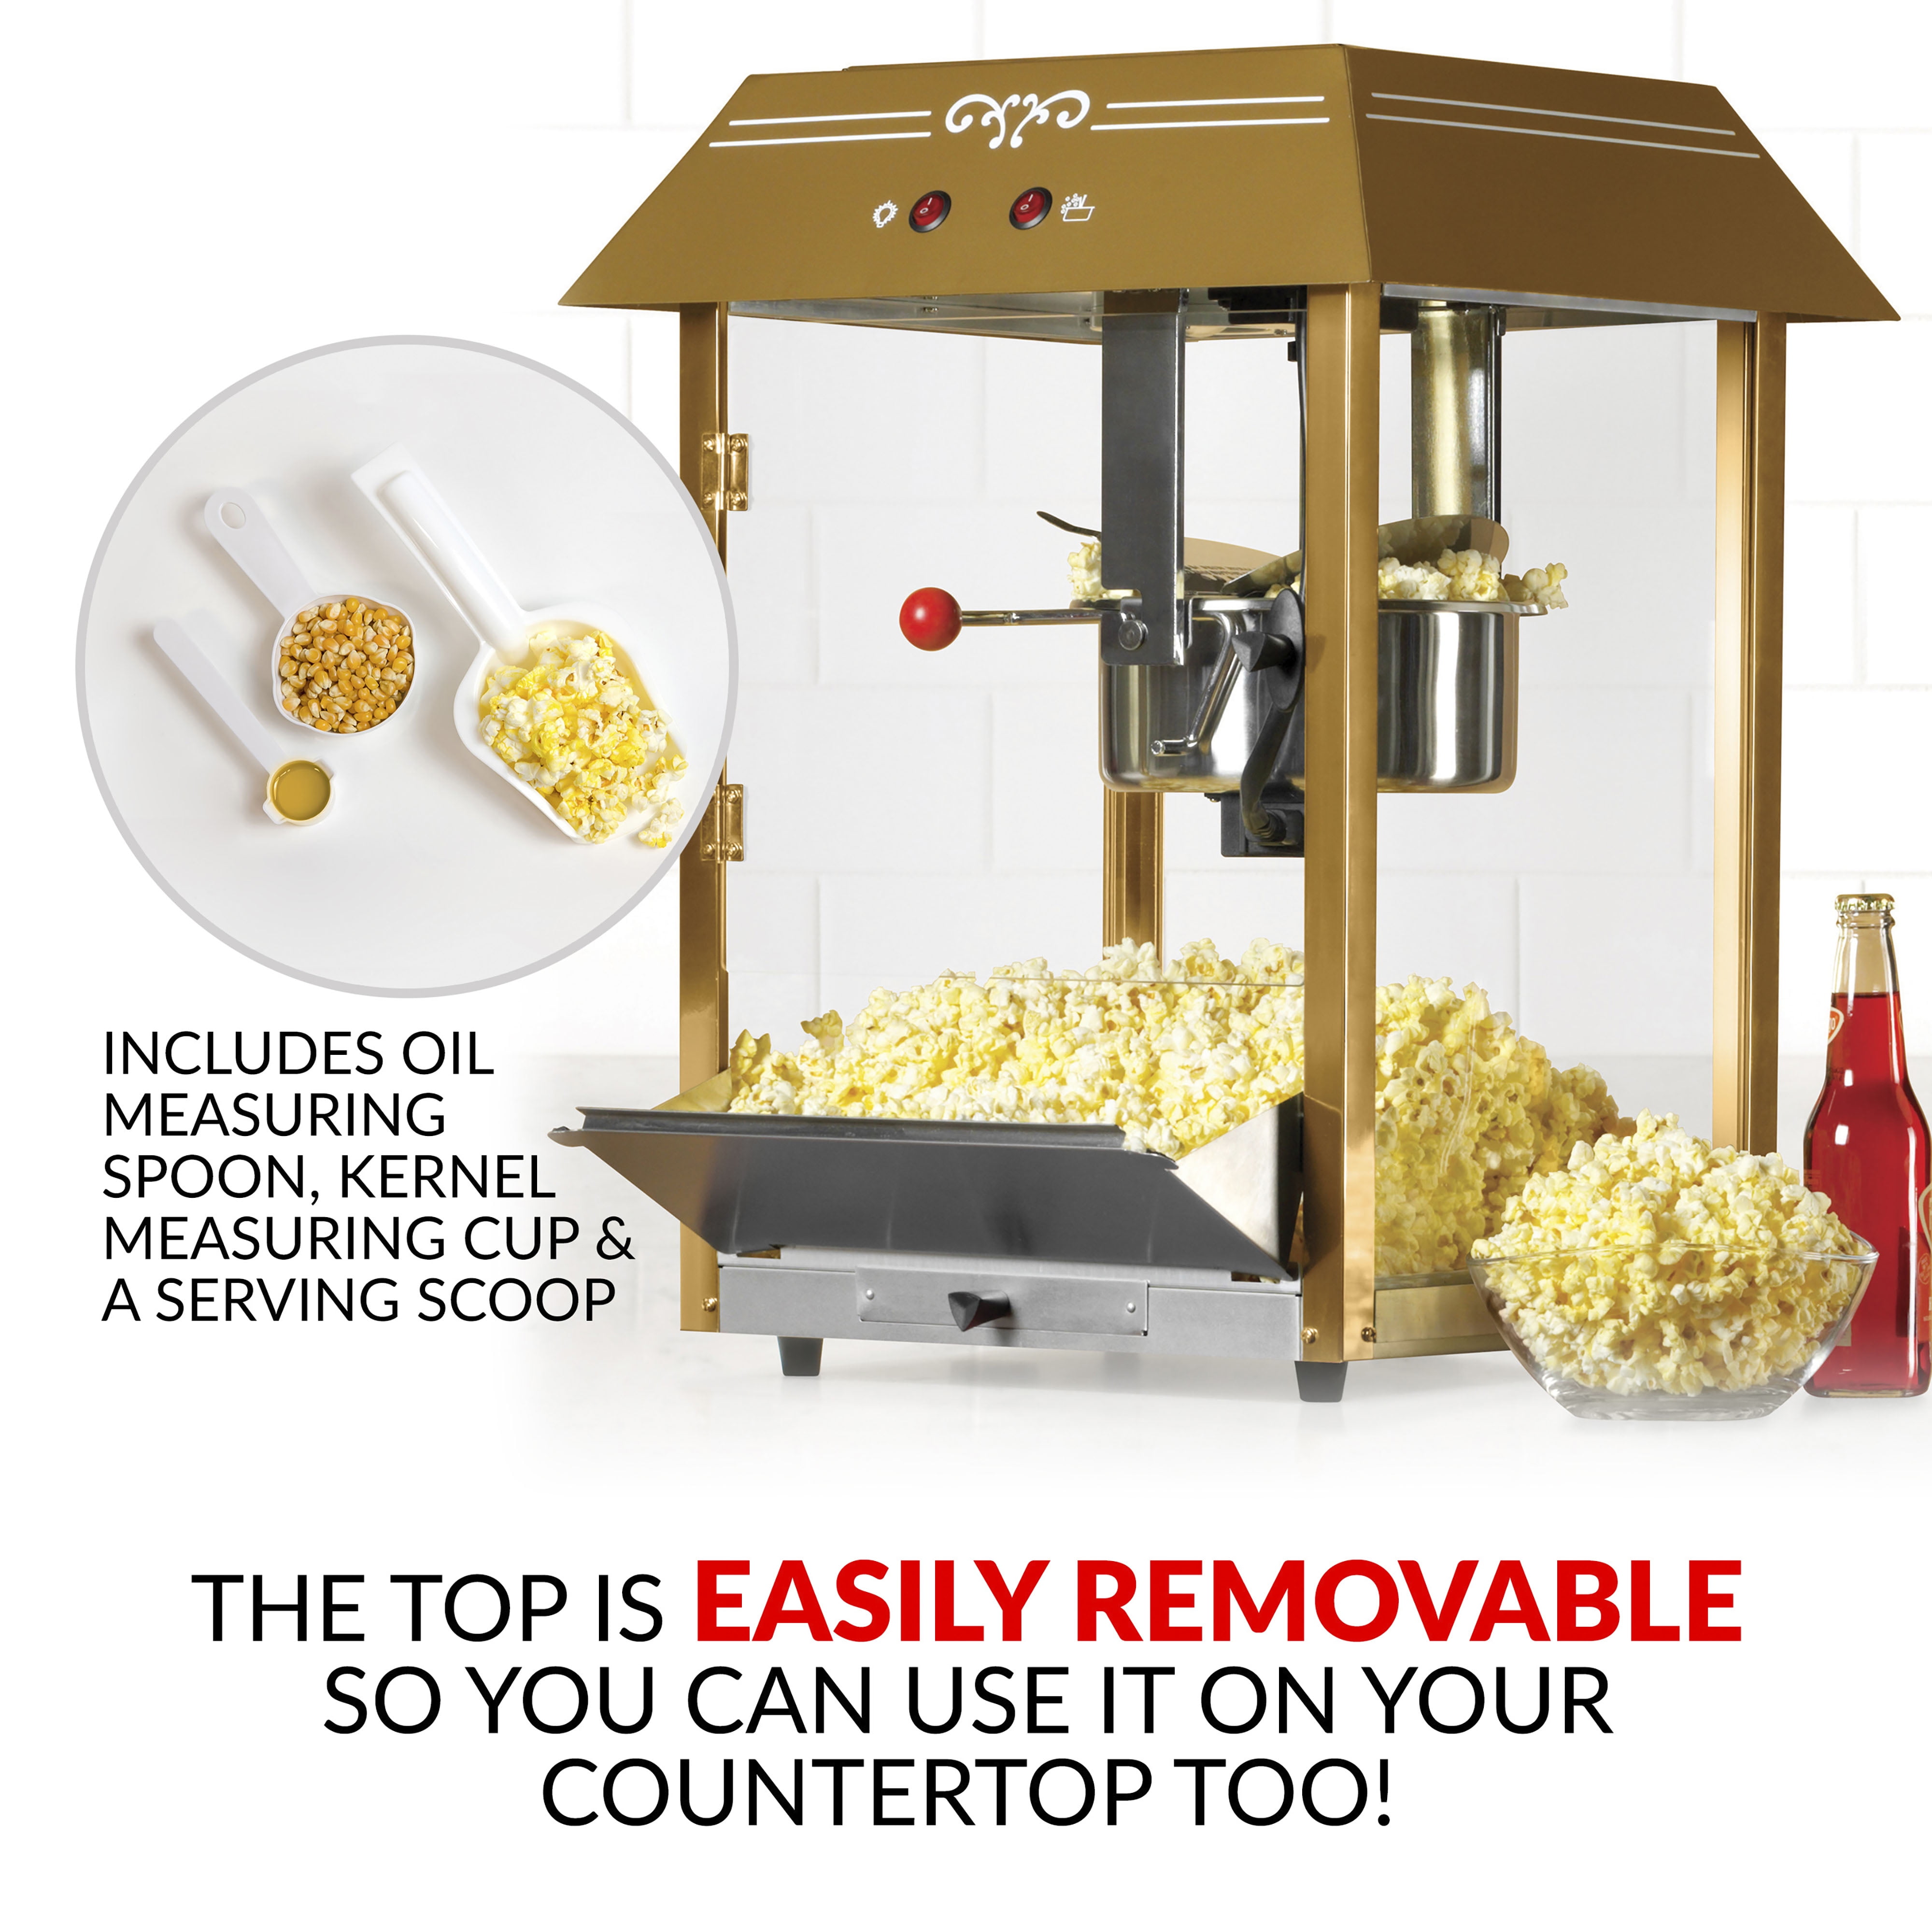 Remember these retro air-pop popcorn makers? - Click Americana